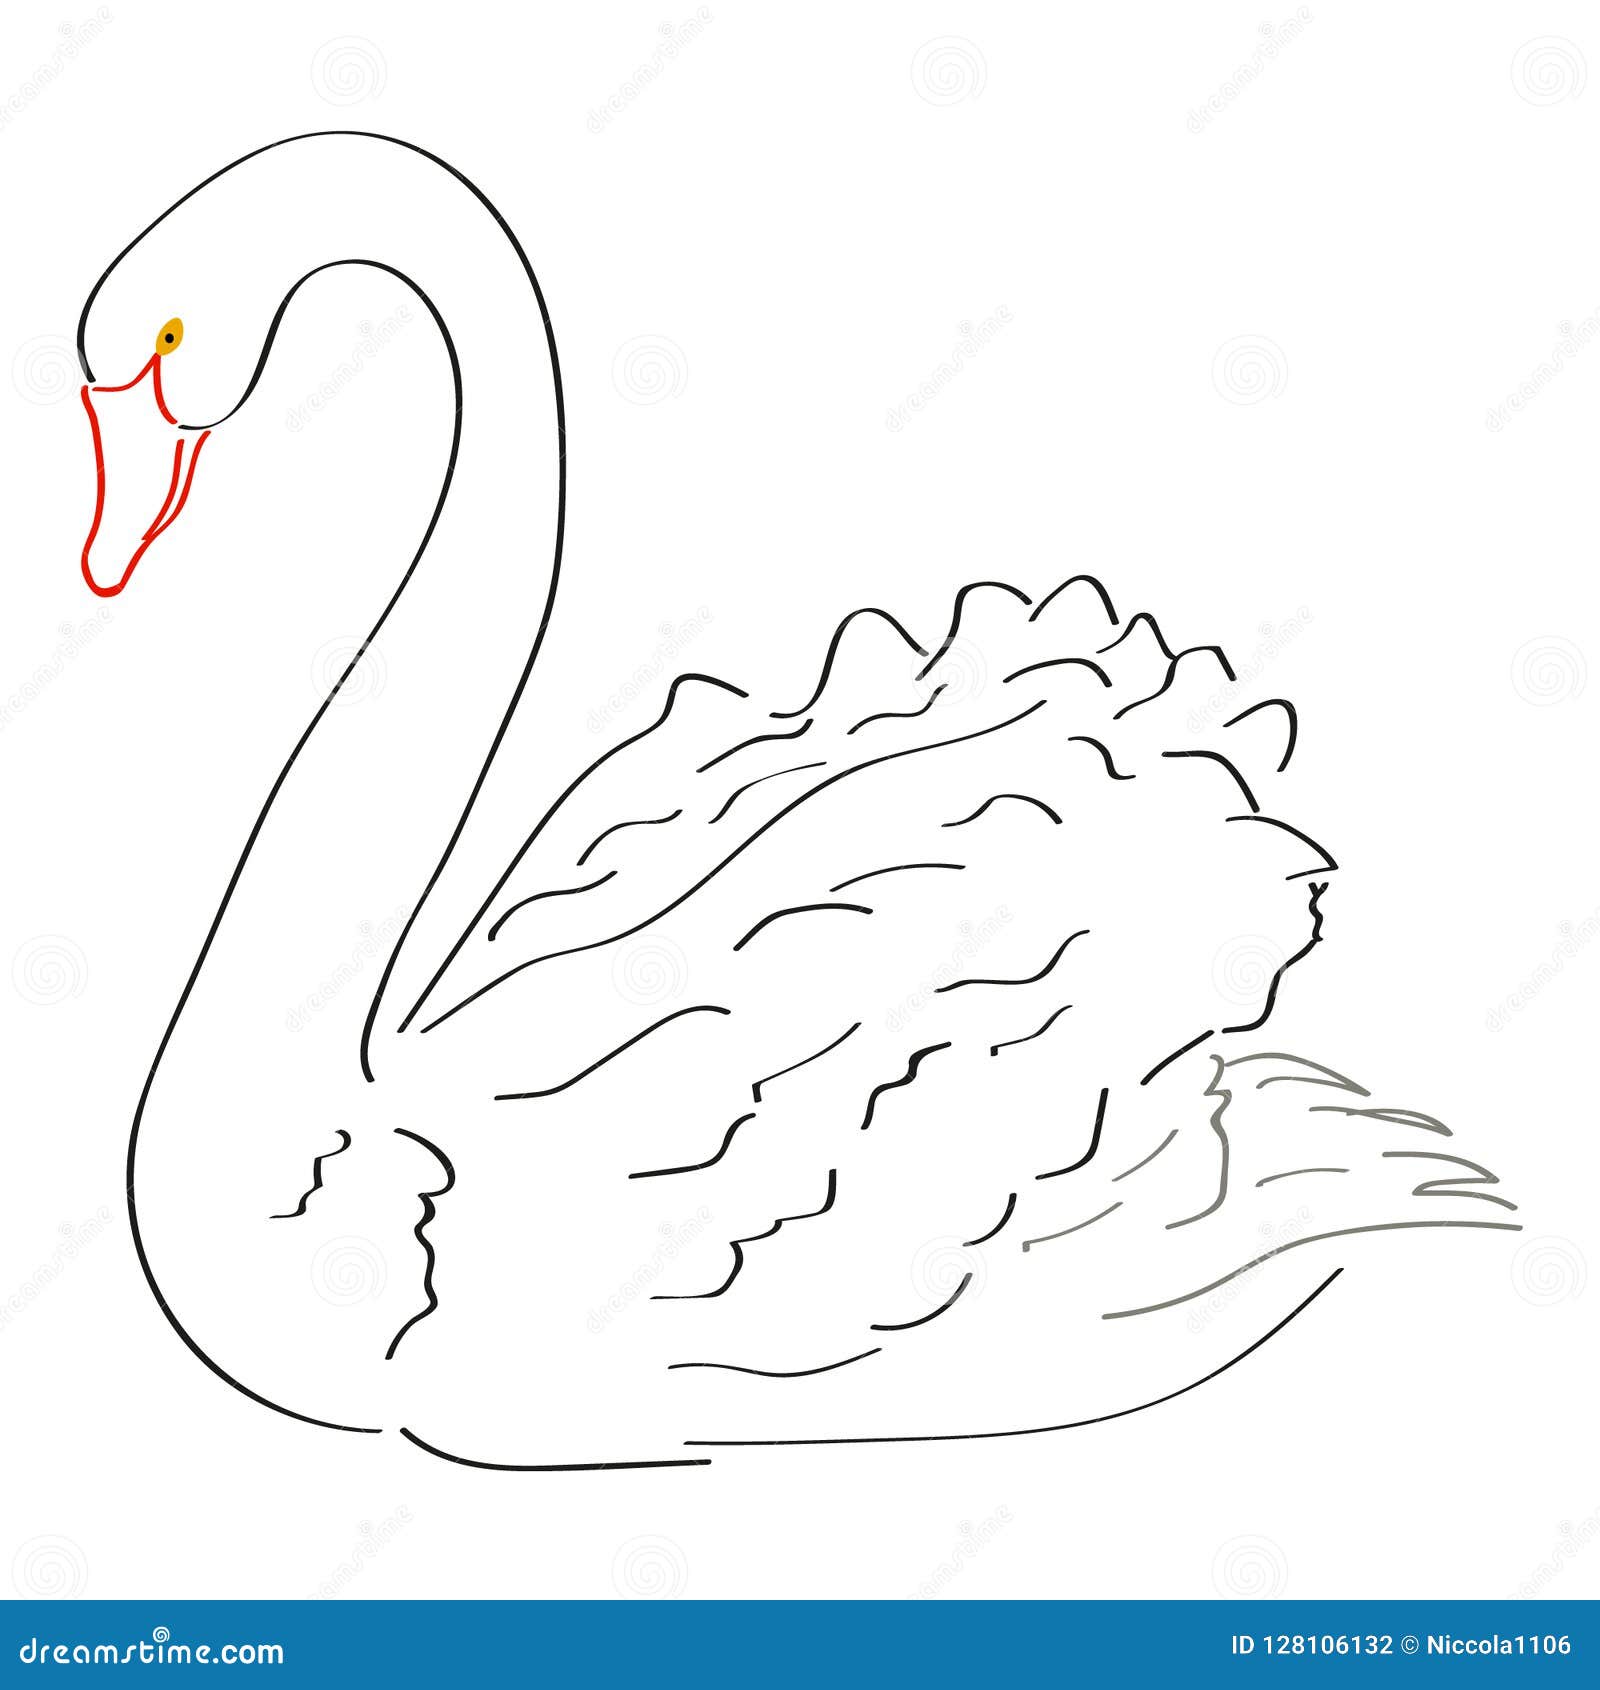 Black Swan Drawing